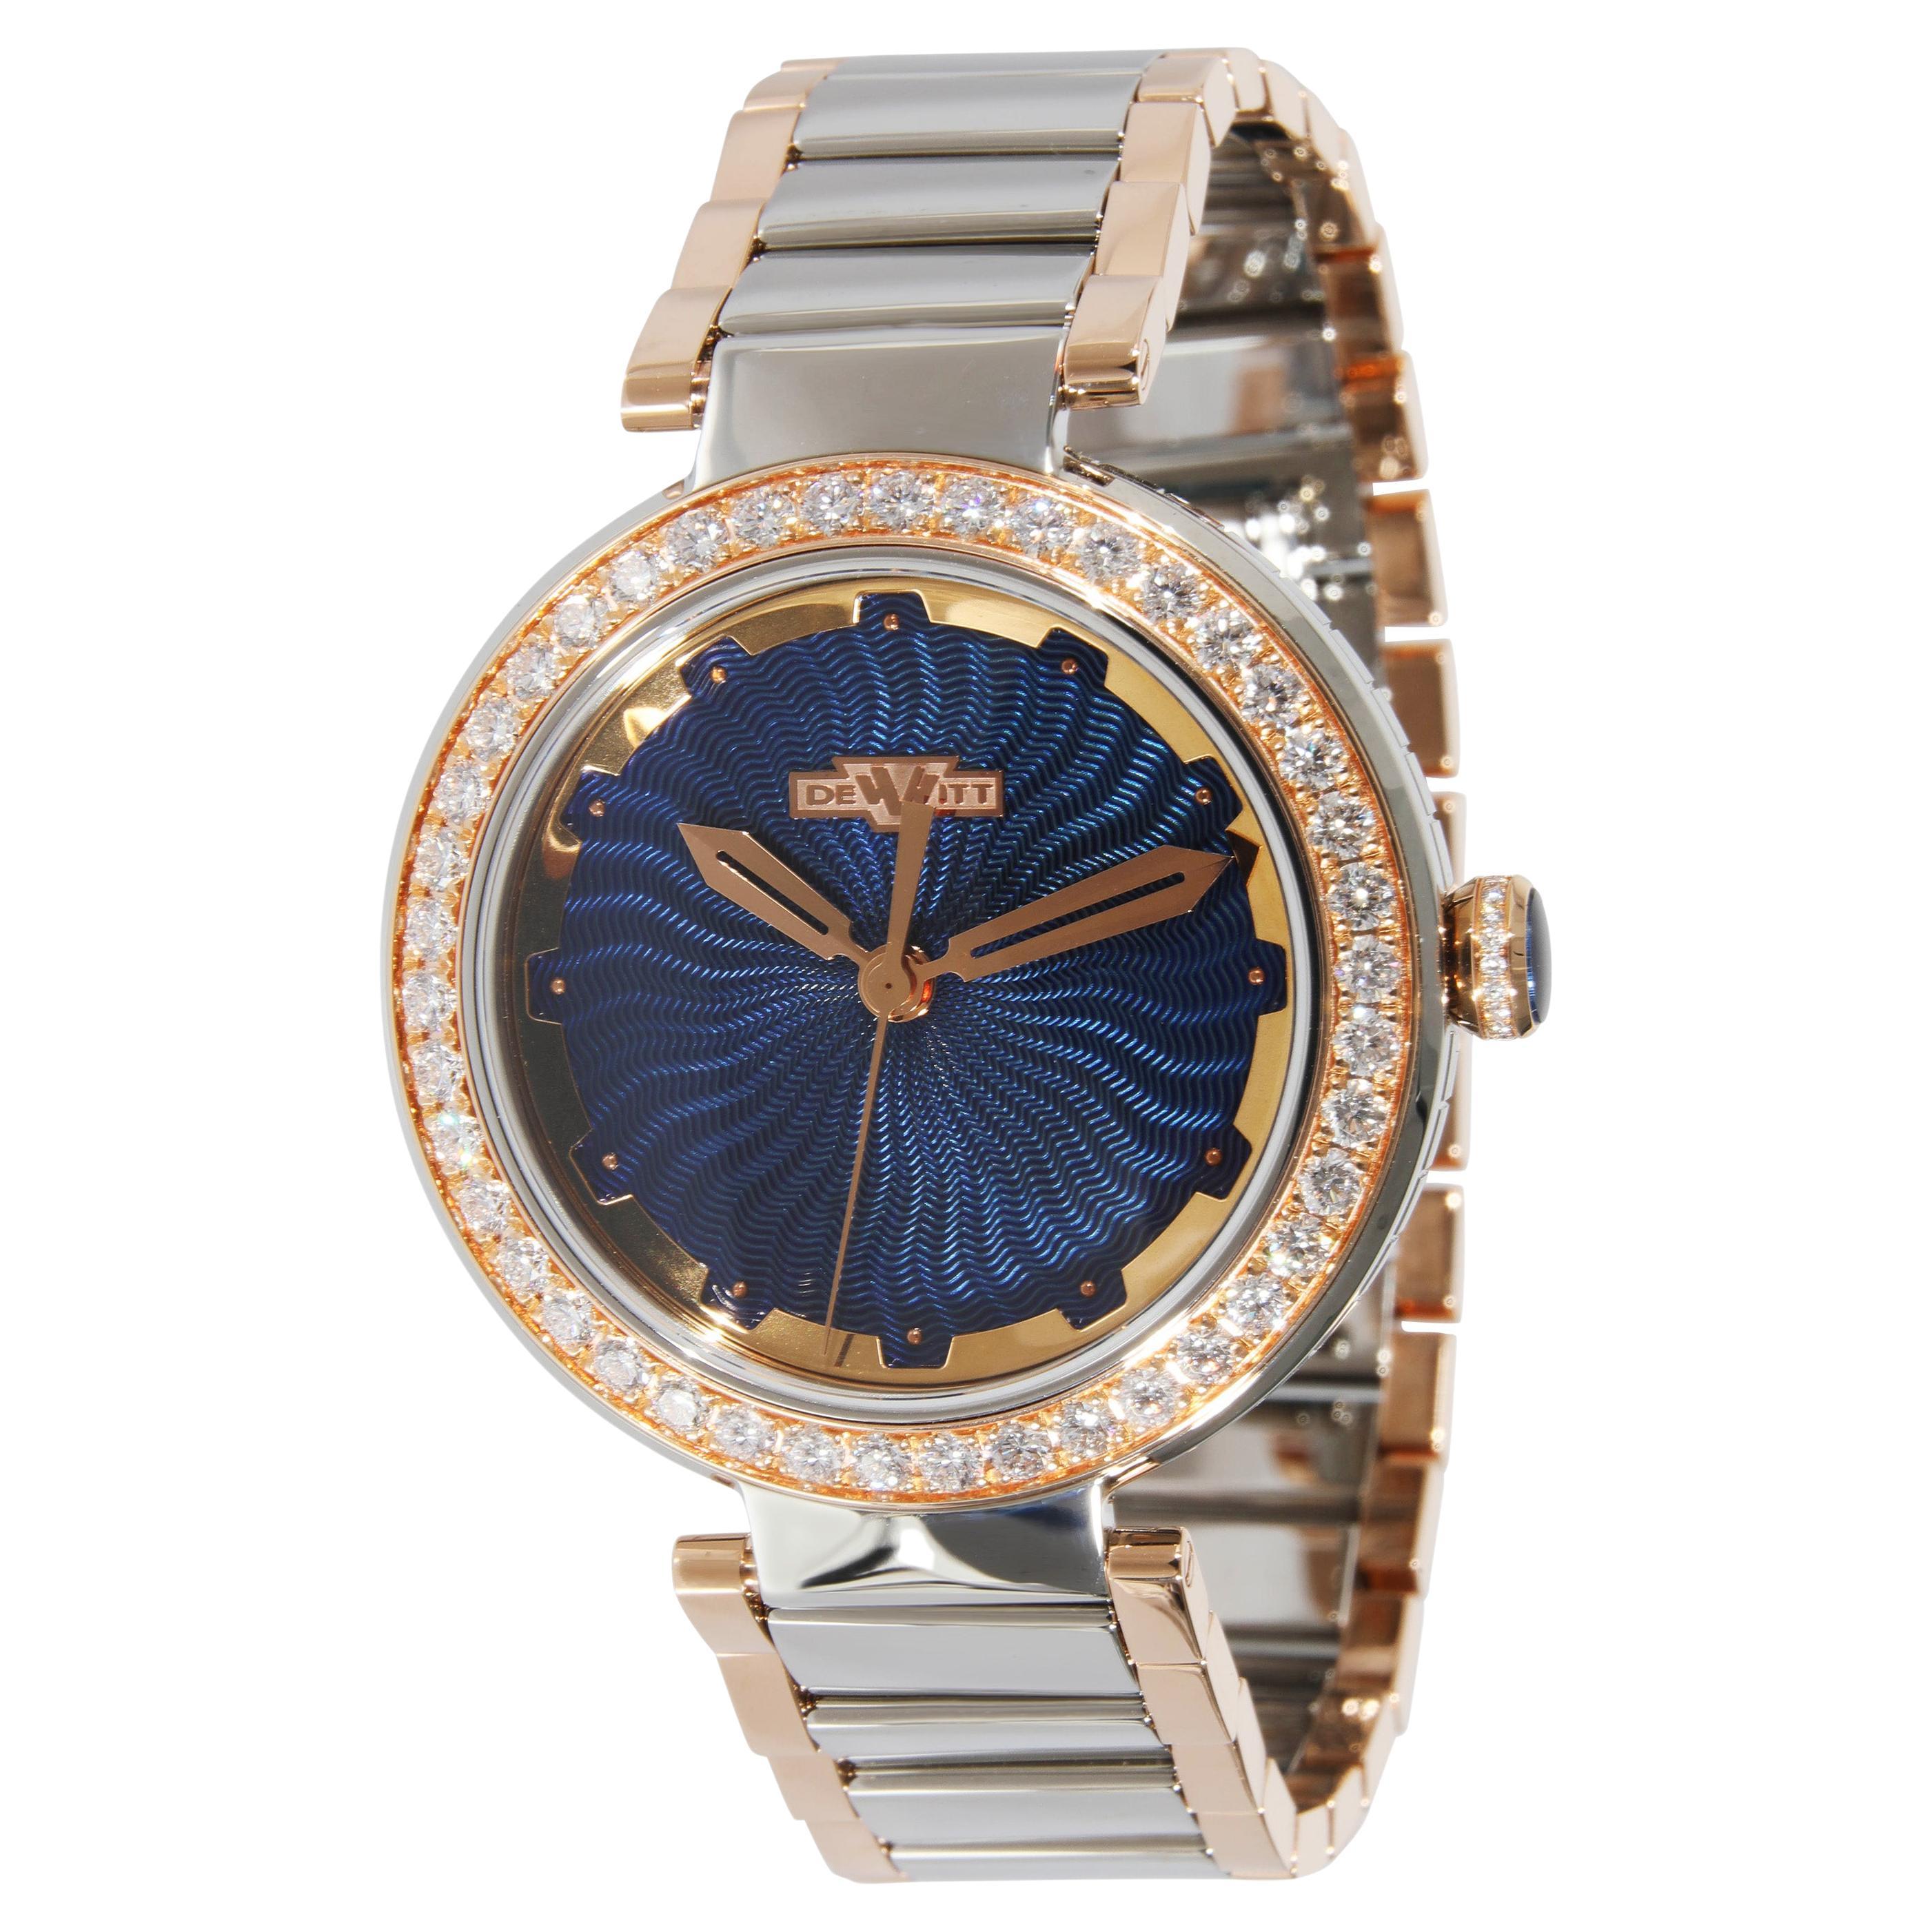 DeWitt Blue Empire BEM.QZ.001 Unisex Watch in 18kt Stainless Steel/Rose Gold For Sale